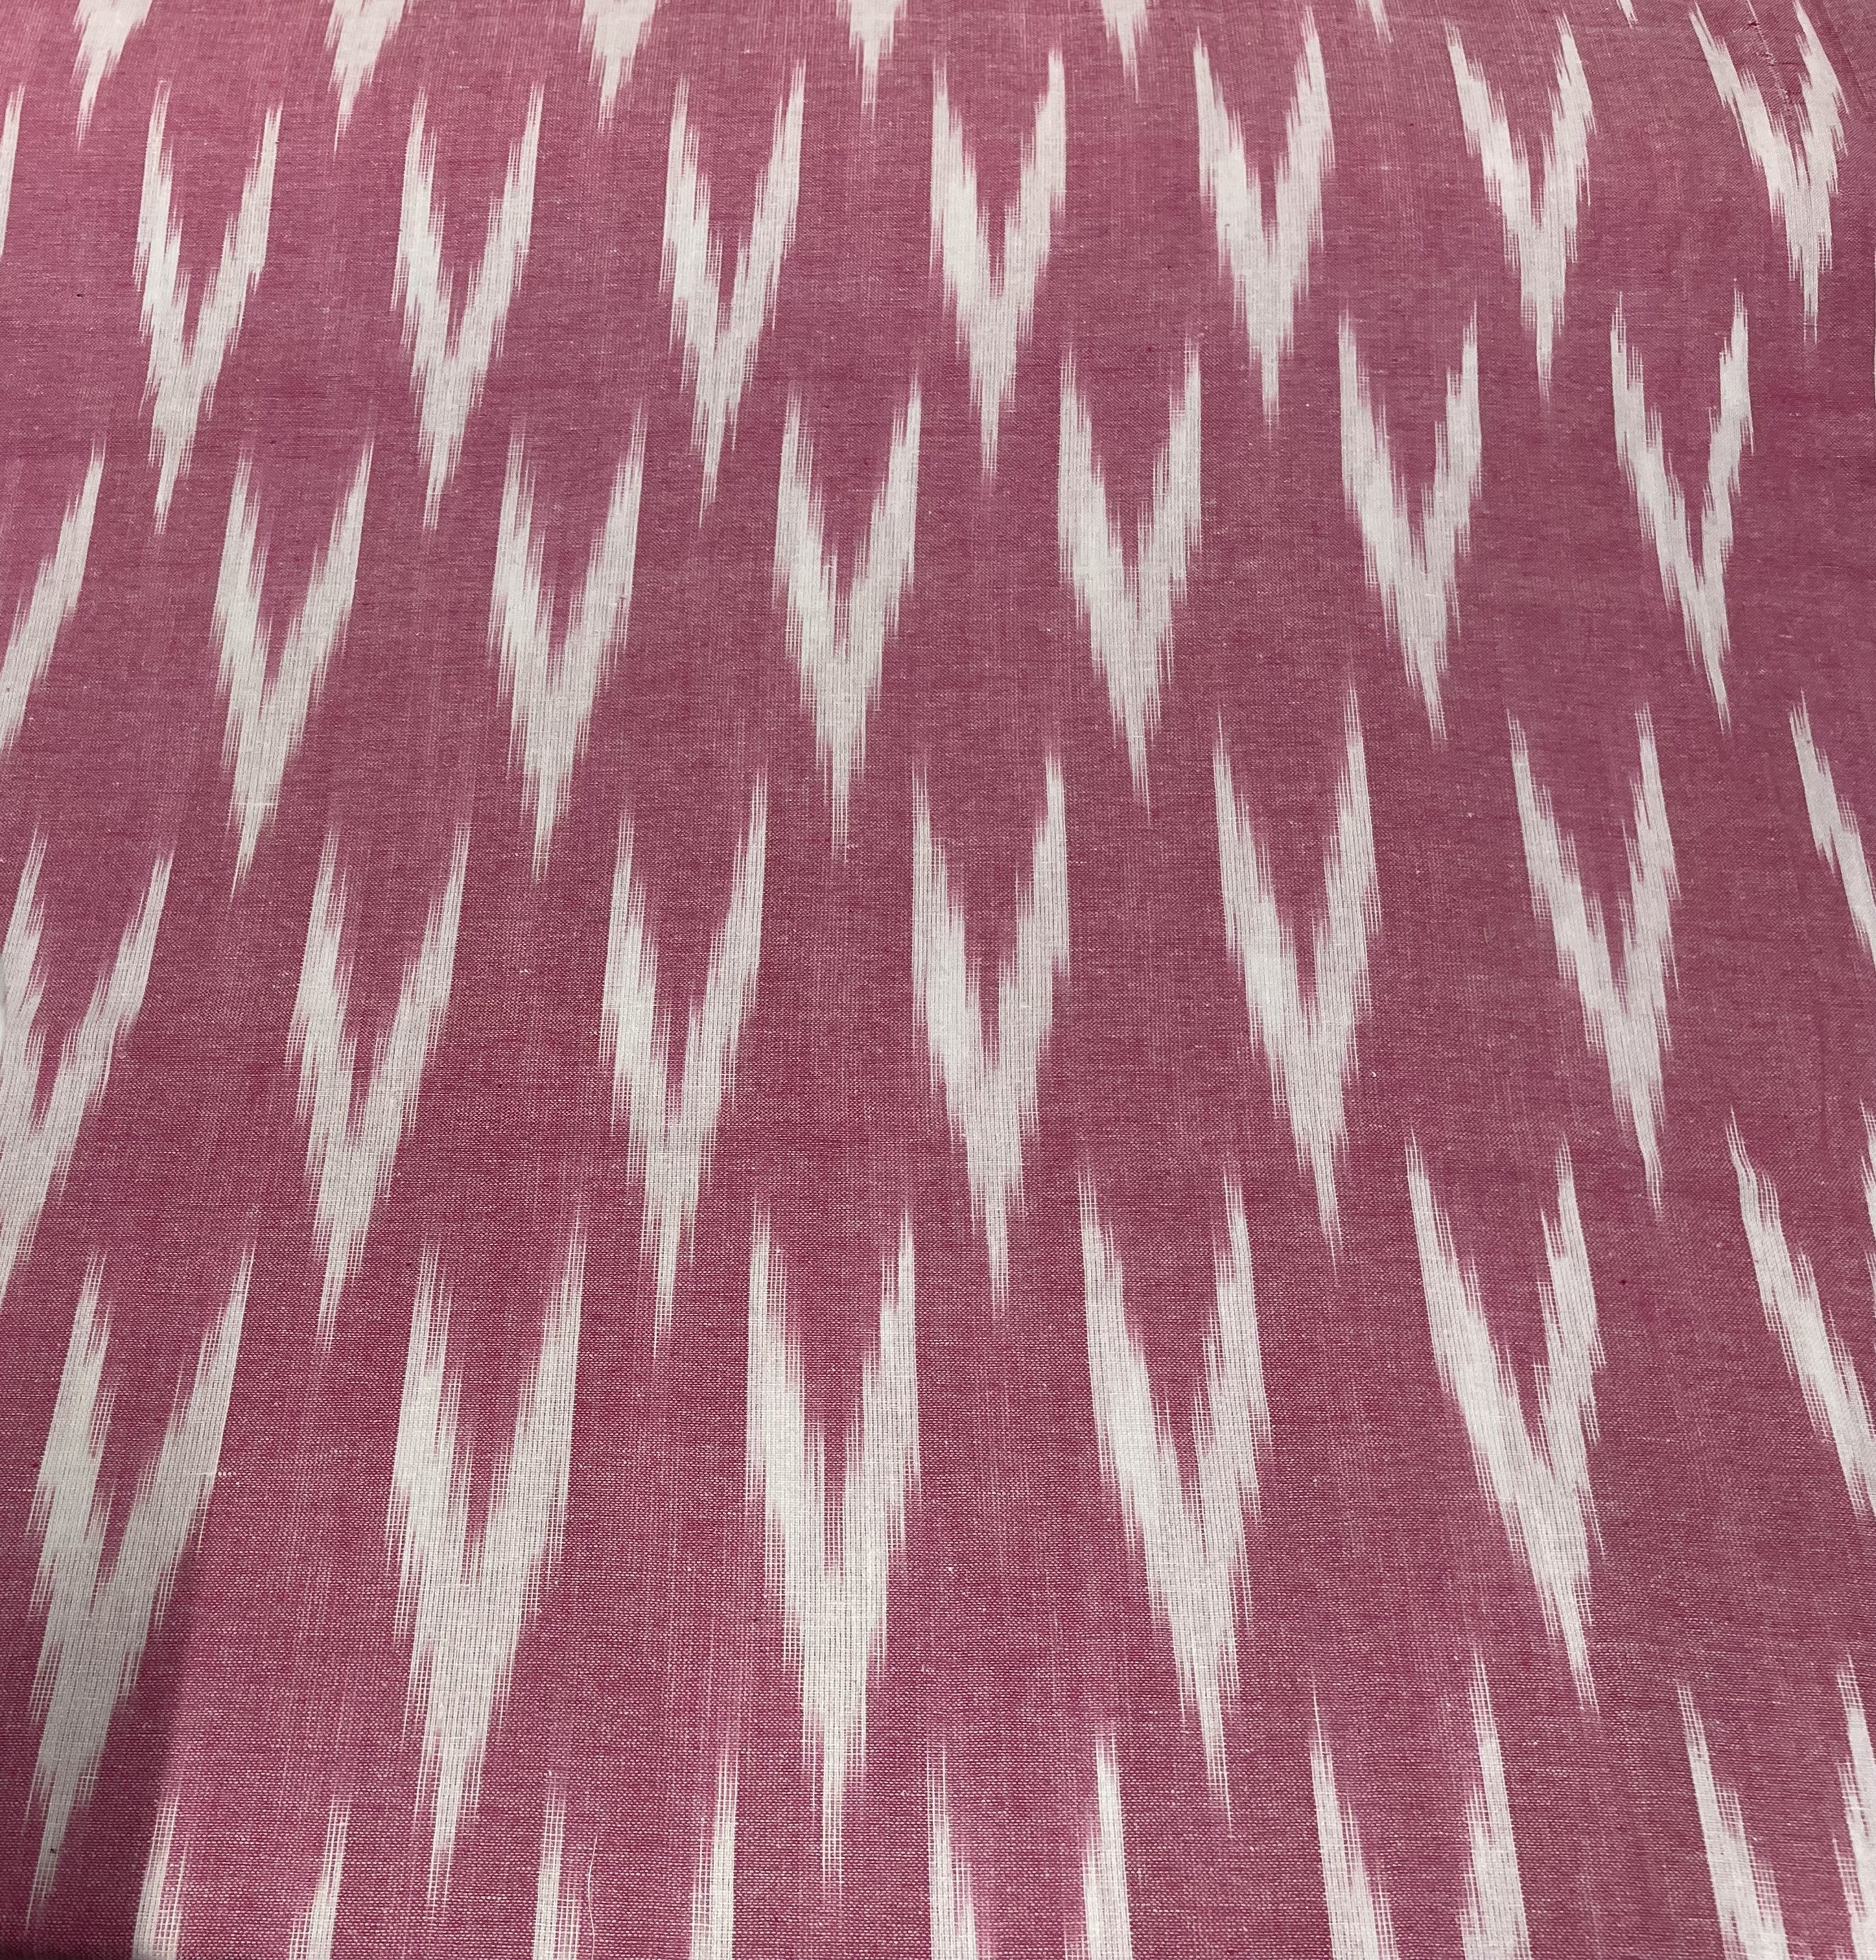 Pink And White Cotton Handloom Ikat (Sku: IK-95)